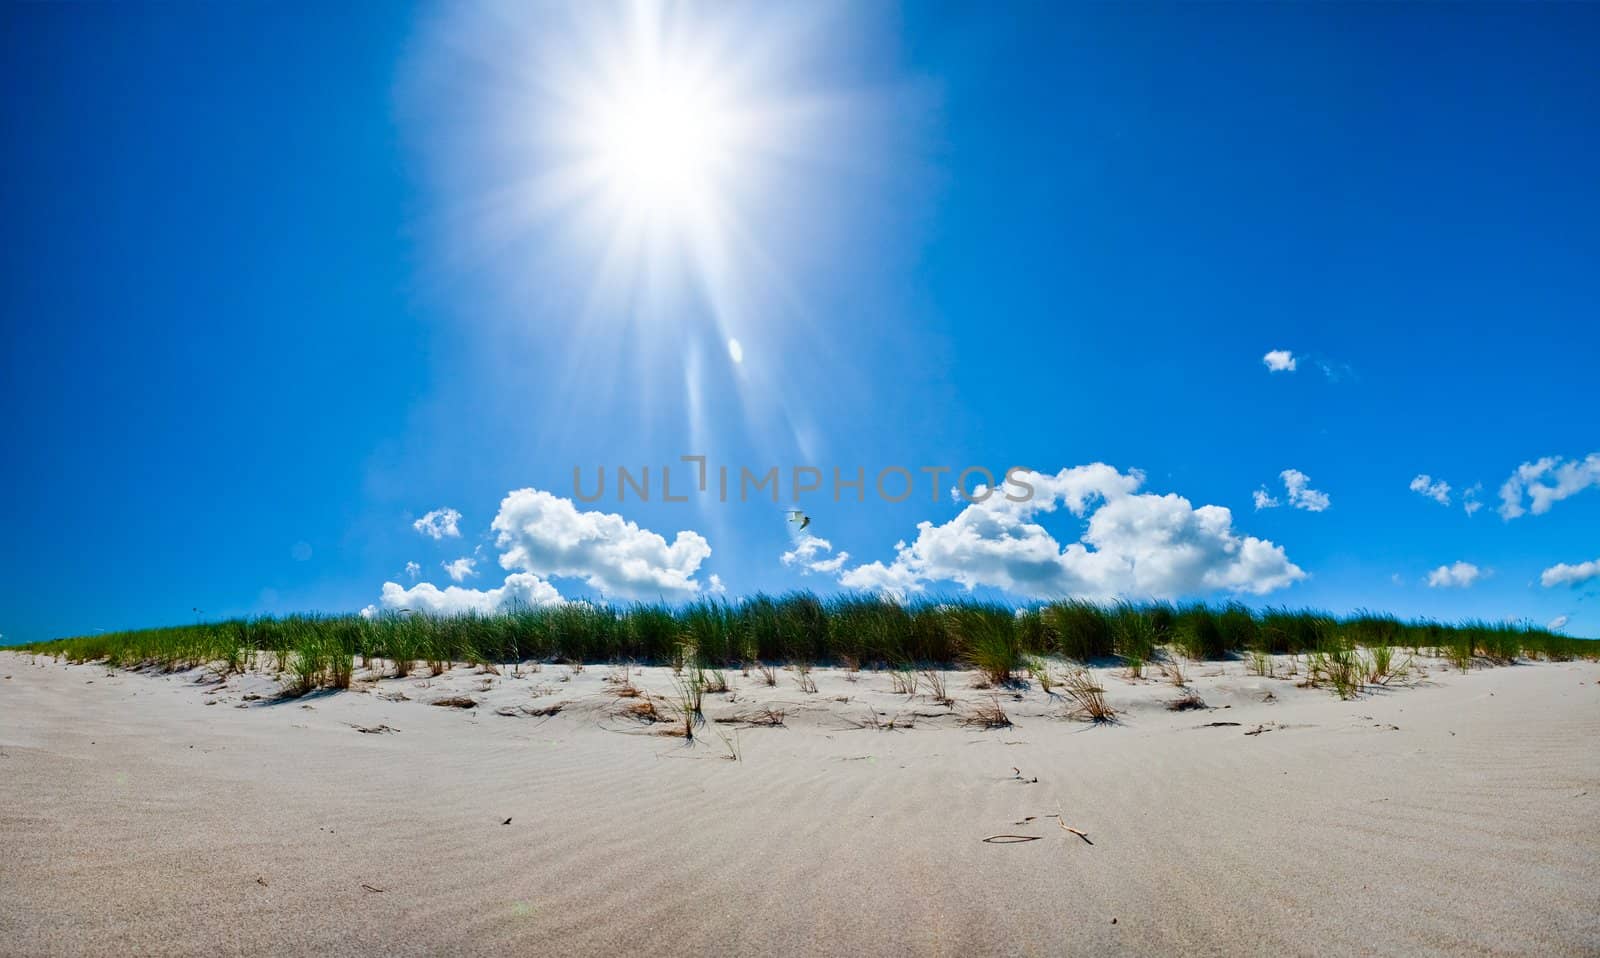 bright sun over beach by filmstroem